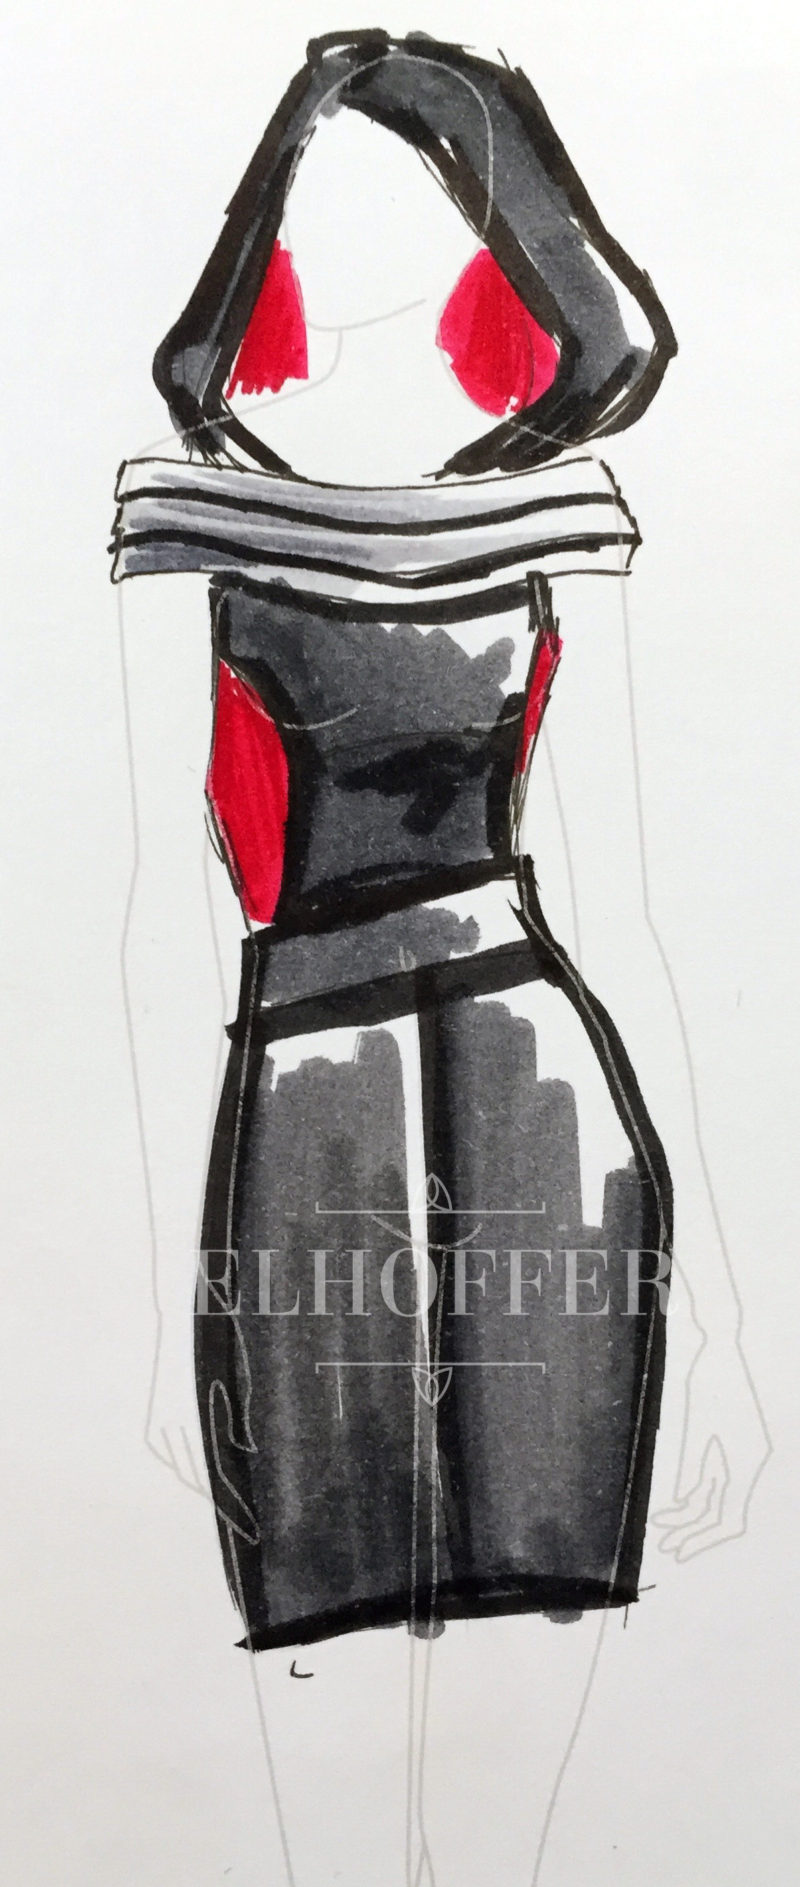 Elhoffer Design - Kylo Ren inspired dress concept sketch